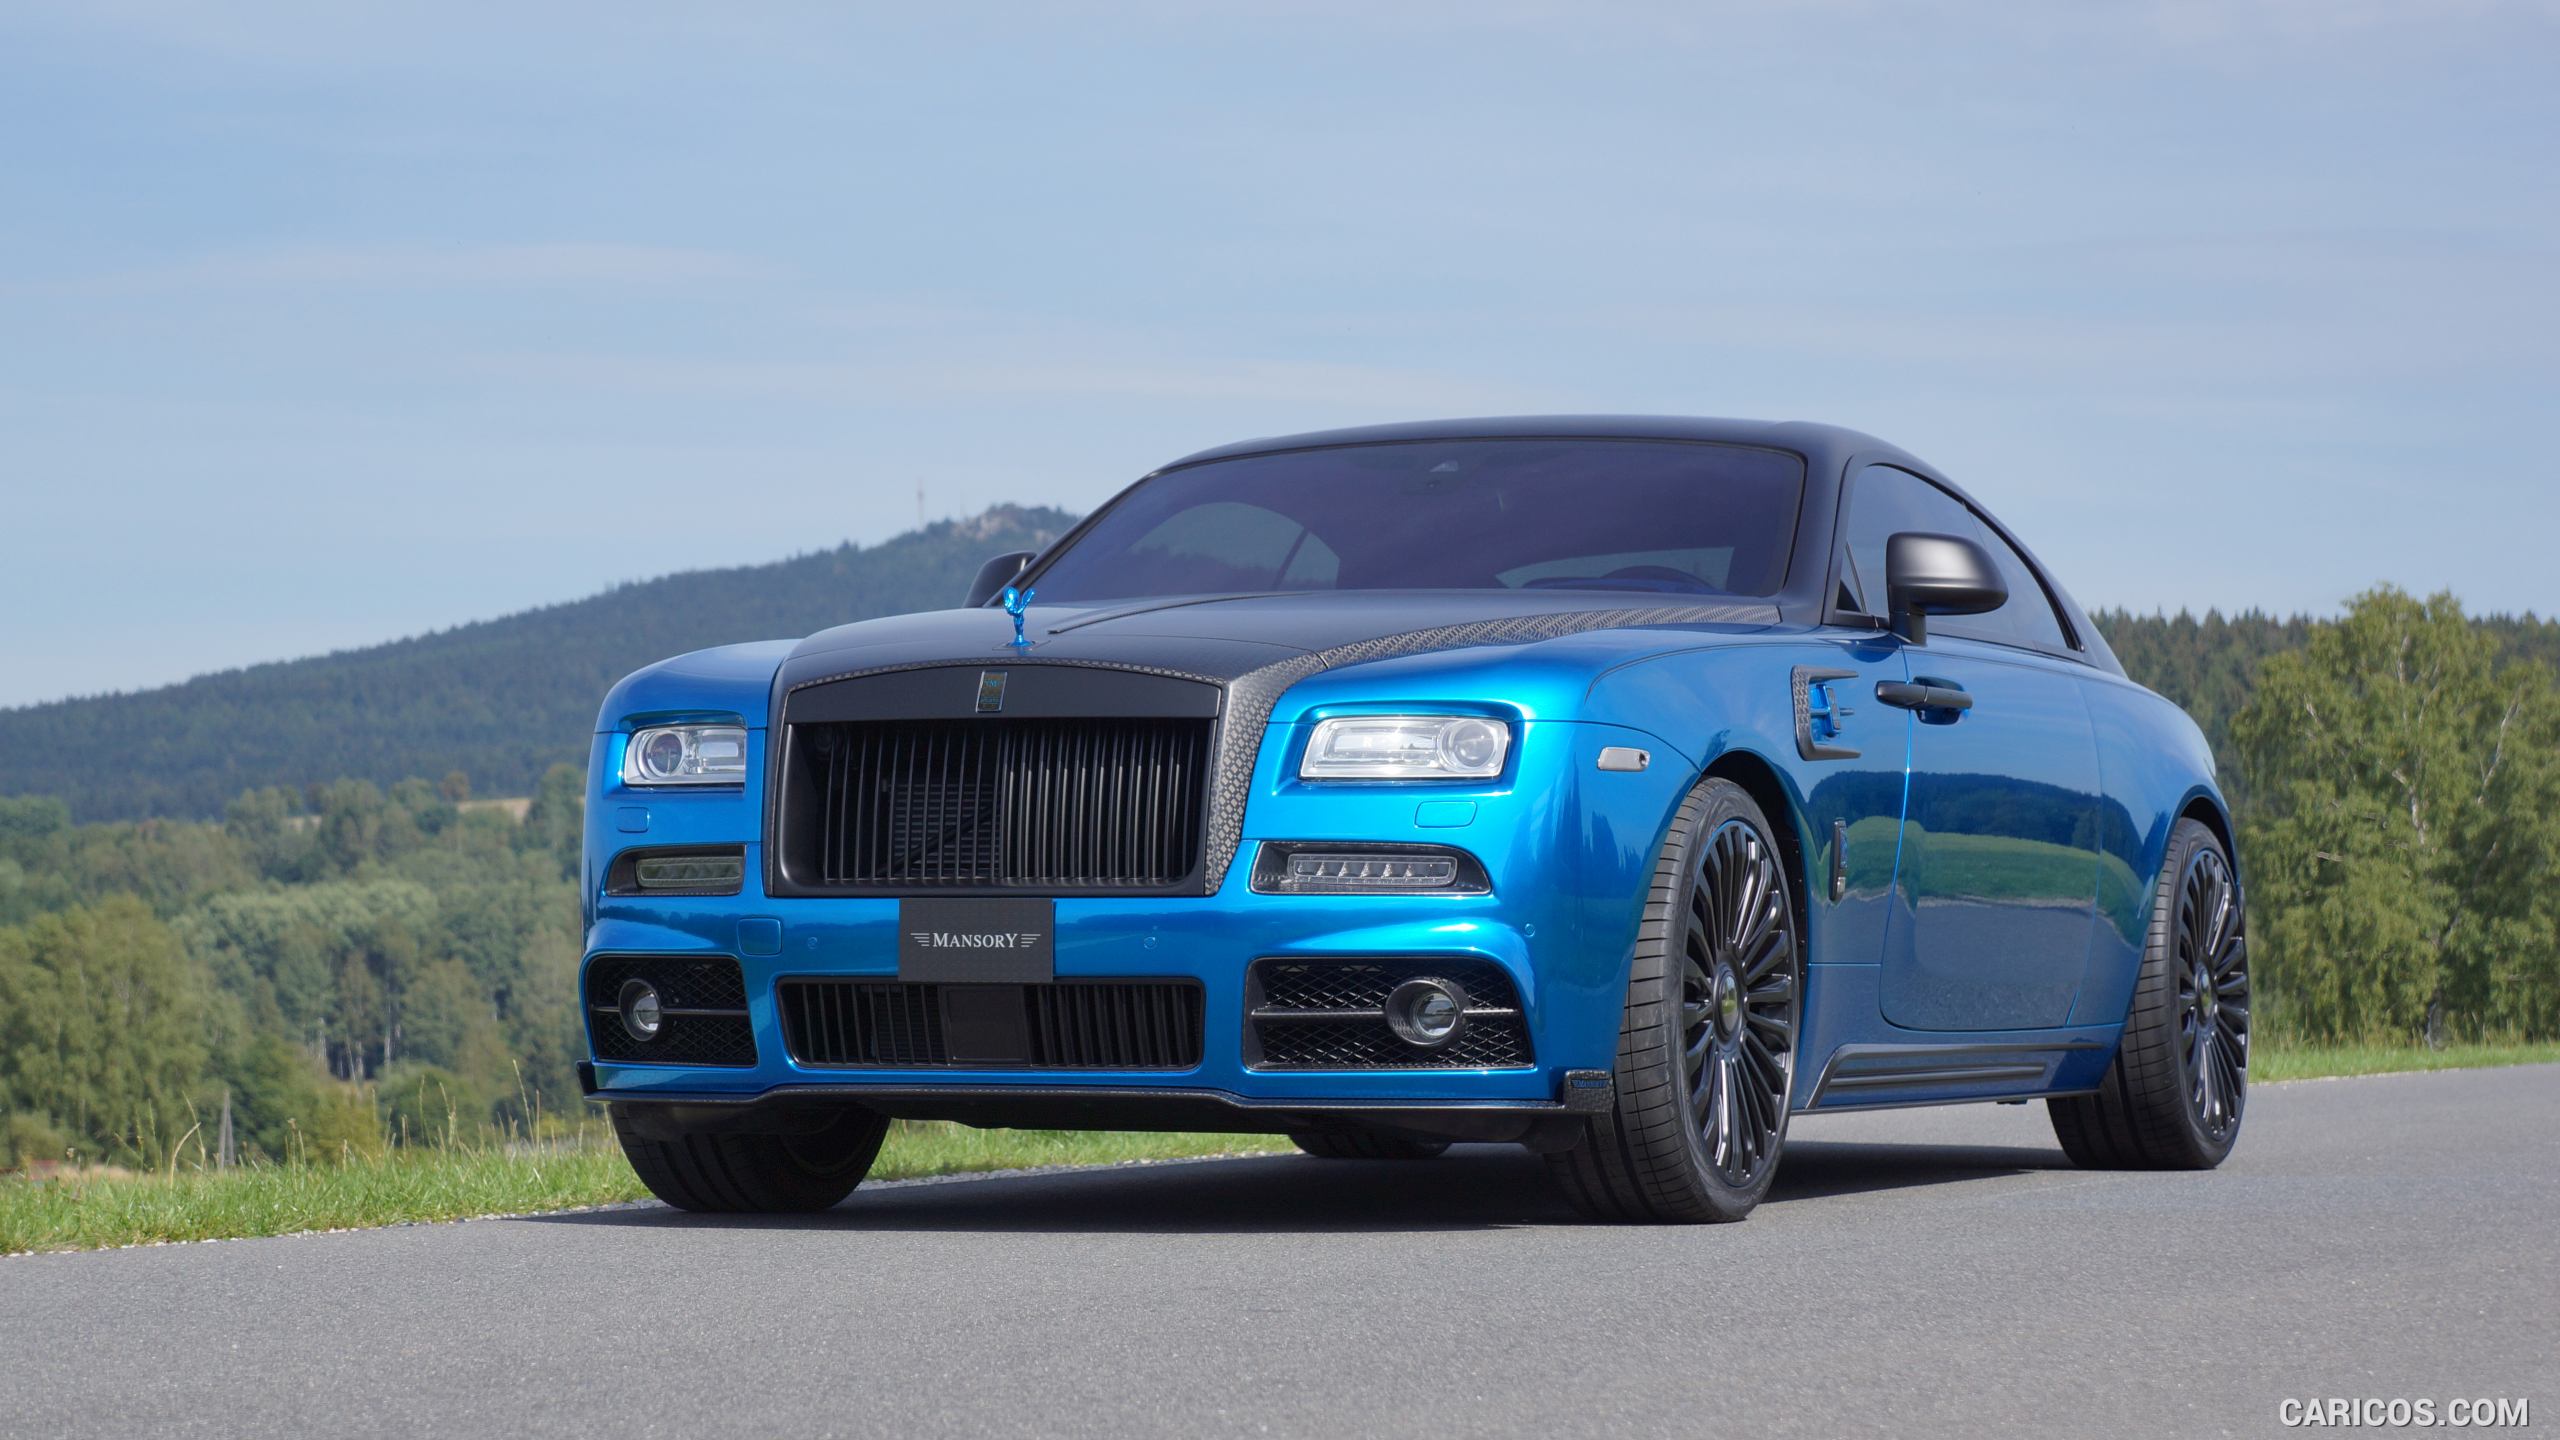 2015 MANSORY BLEURION based on Rolls-Royce Wraith - Front, #4 of 12